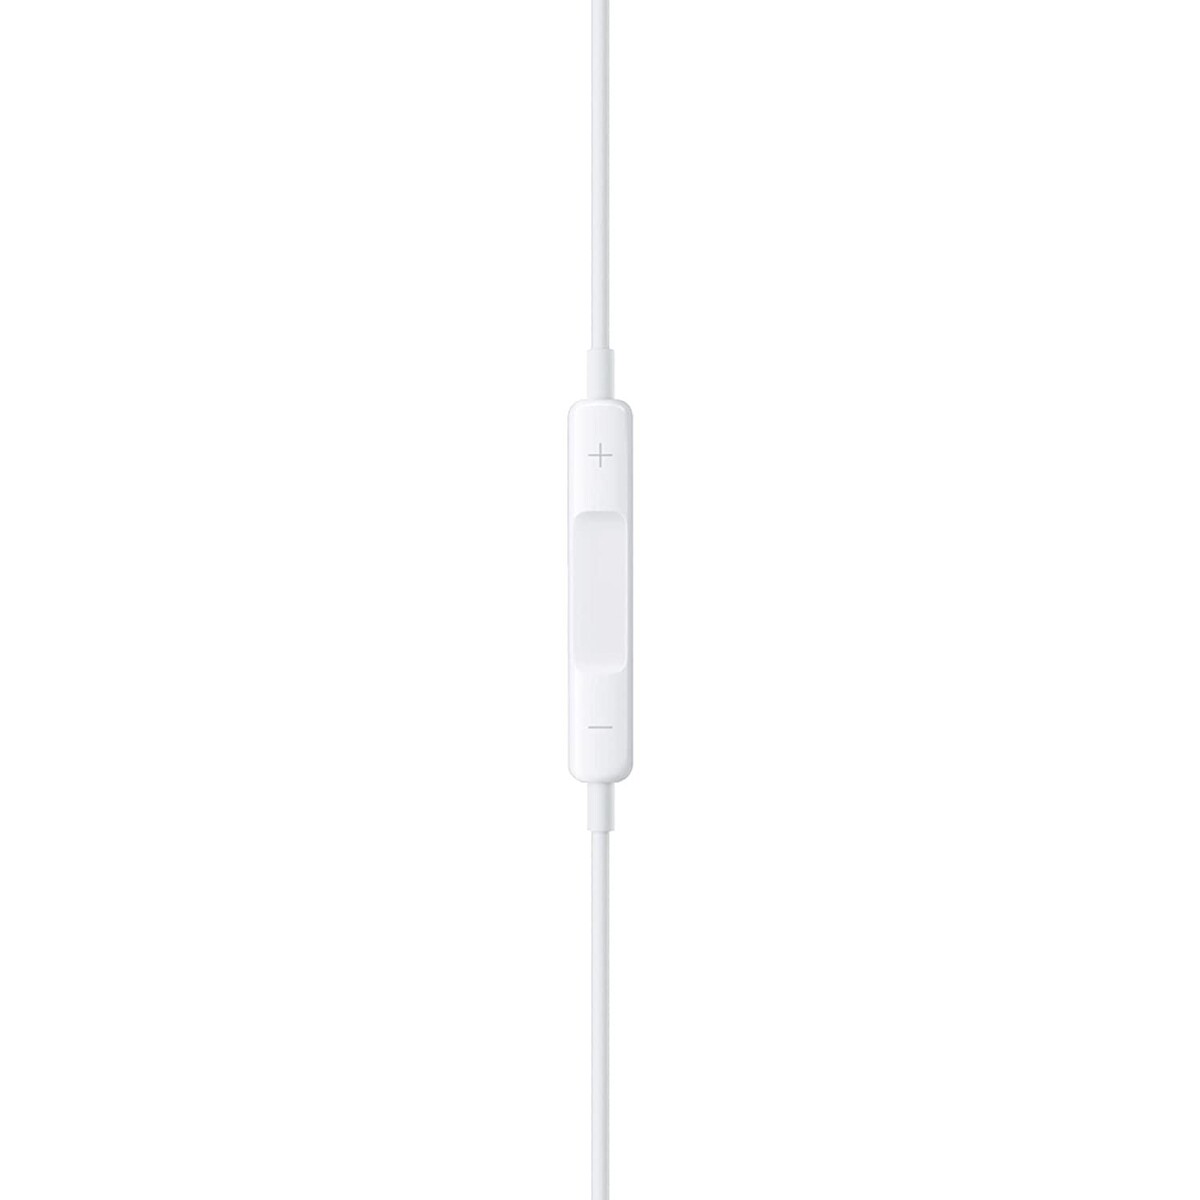 Apple EarPods MMTN2ZM/A With Lightning Connector Earphones White